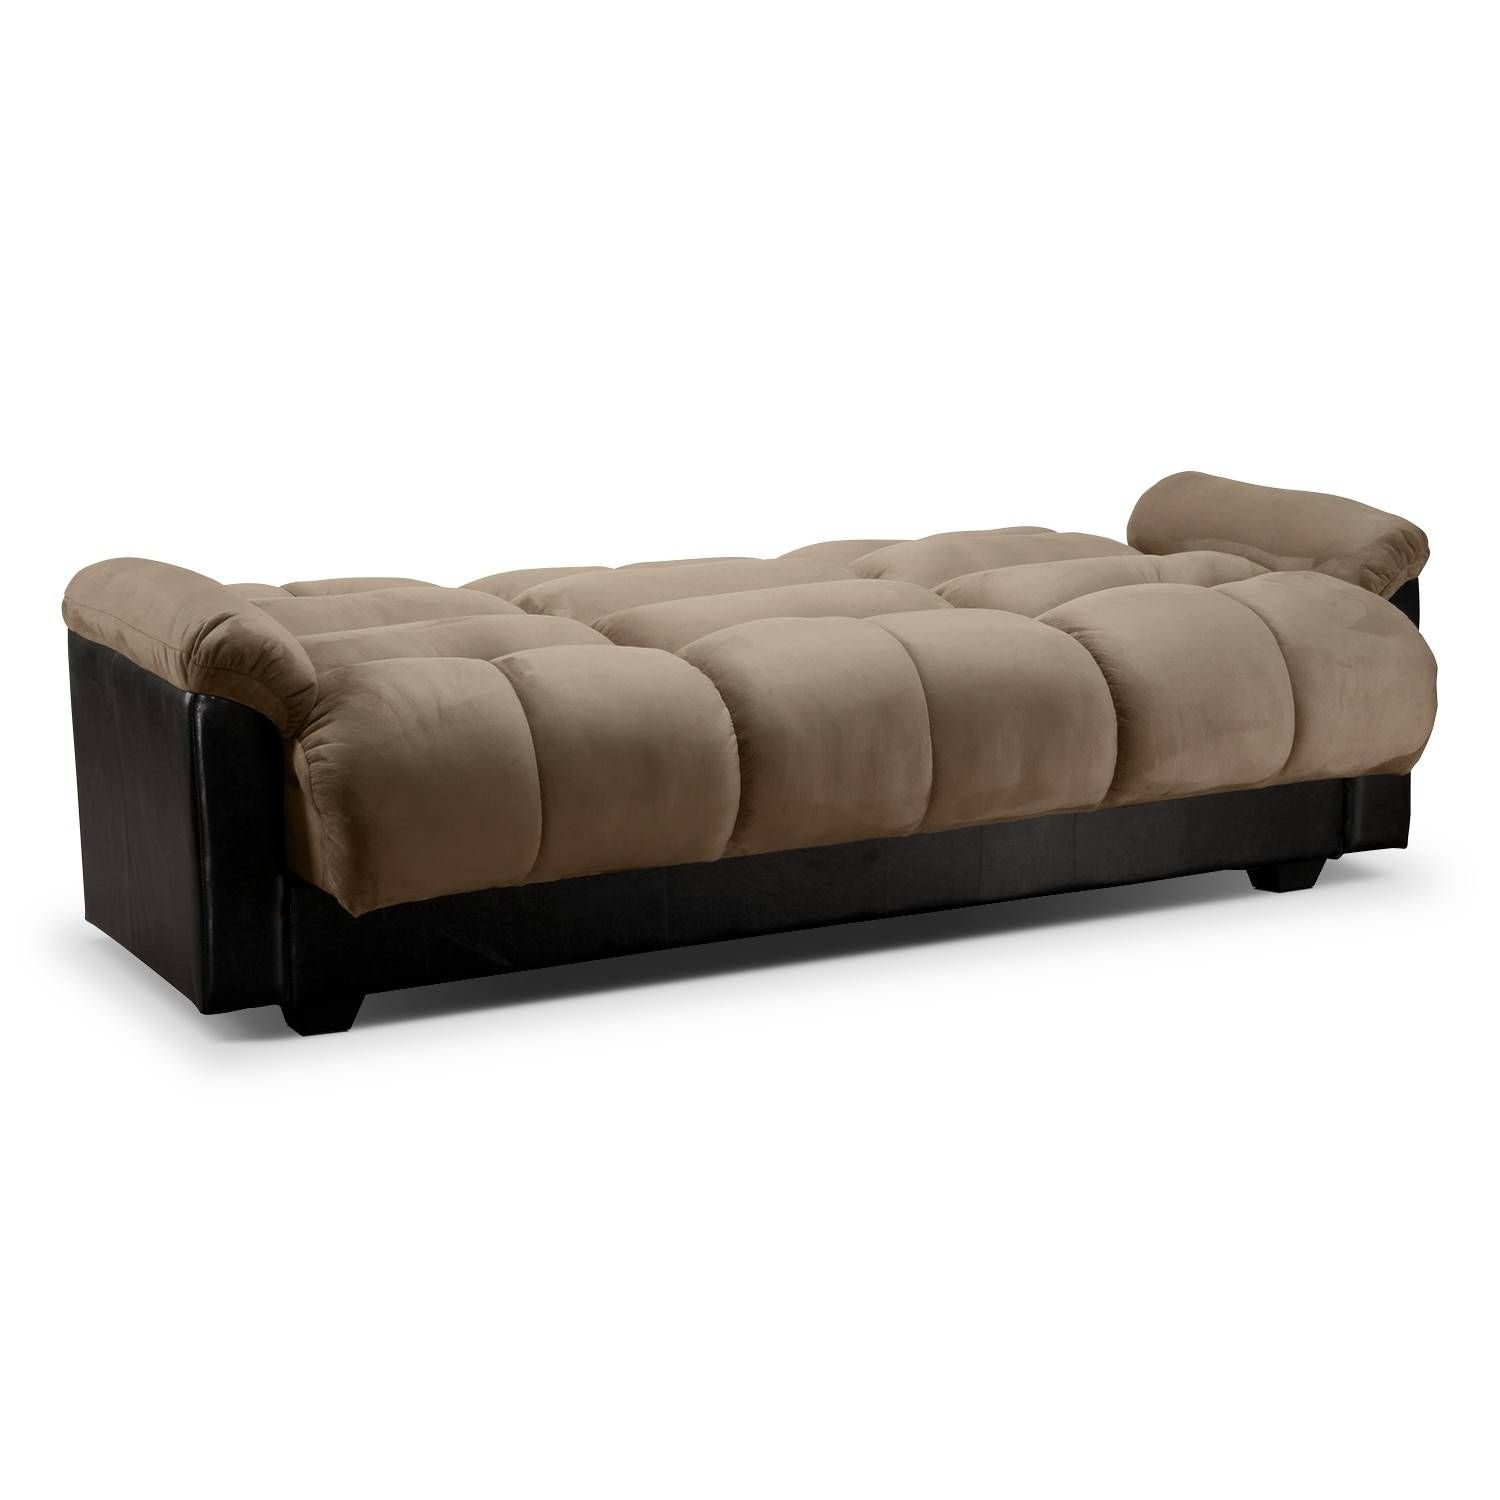 Ara Futon Sofa Bed With Storage – Hazelnut | Value City Furniture Regarding Fulton Sofa Beds (View 7 of 30)